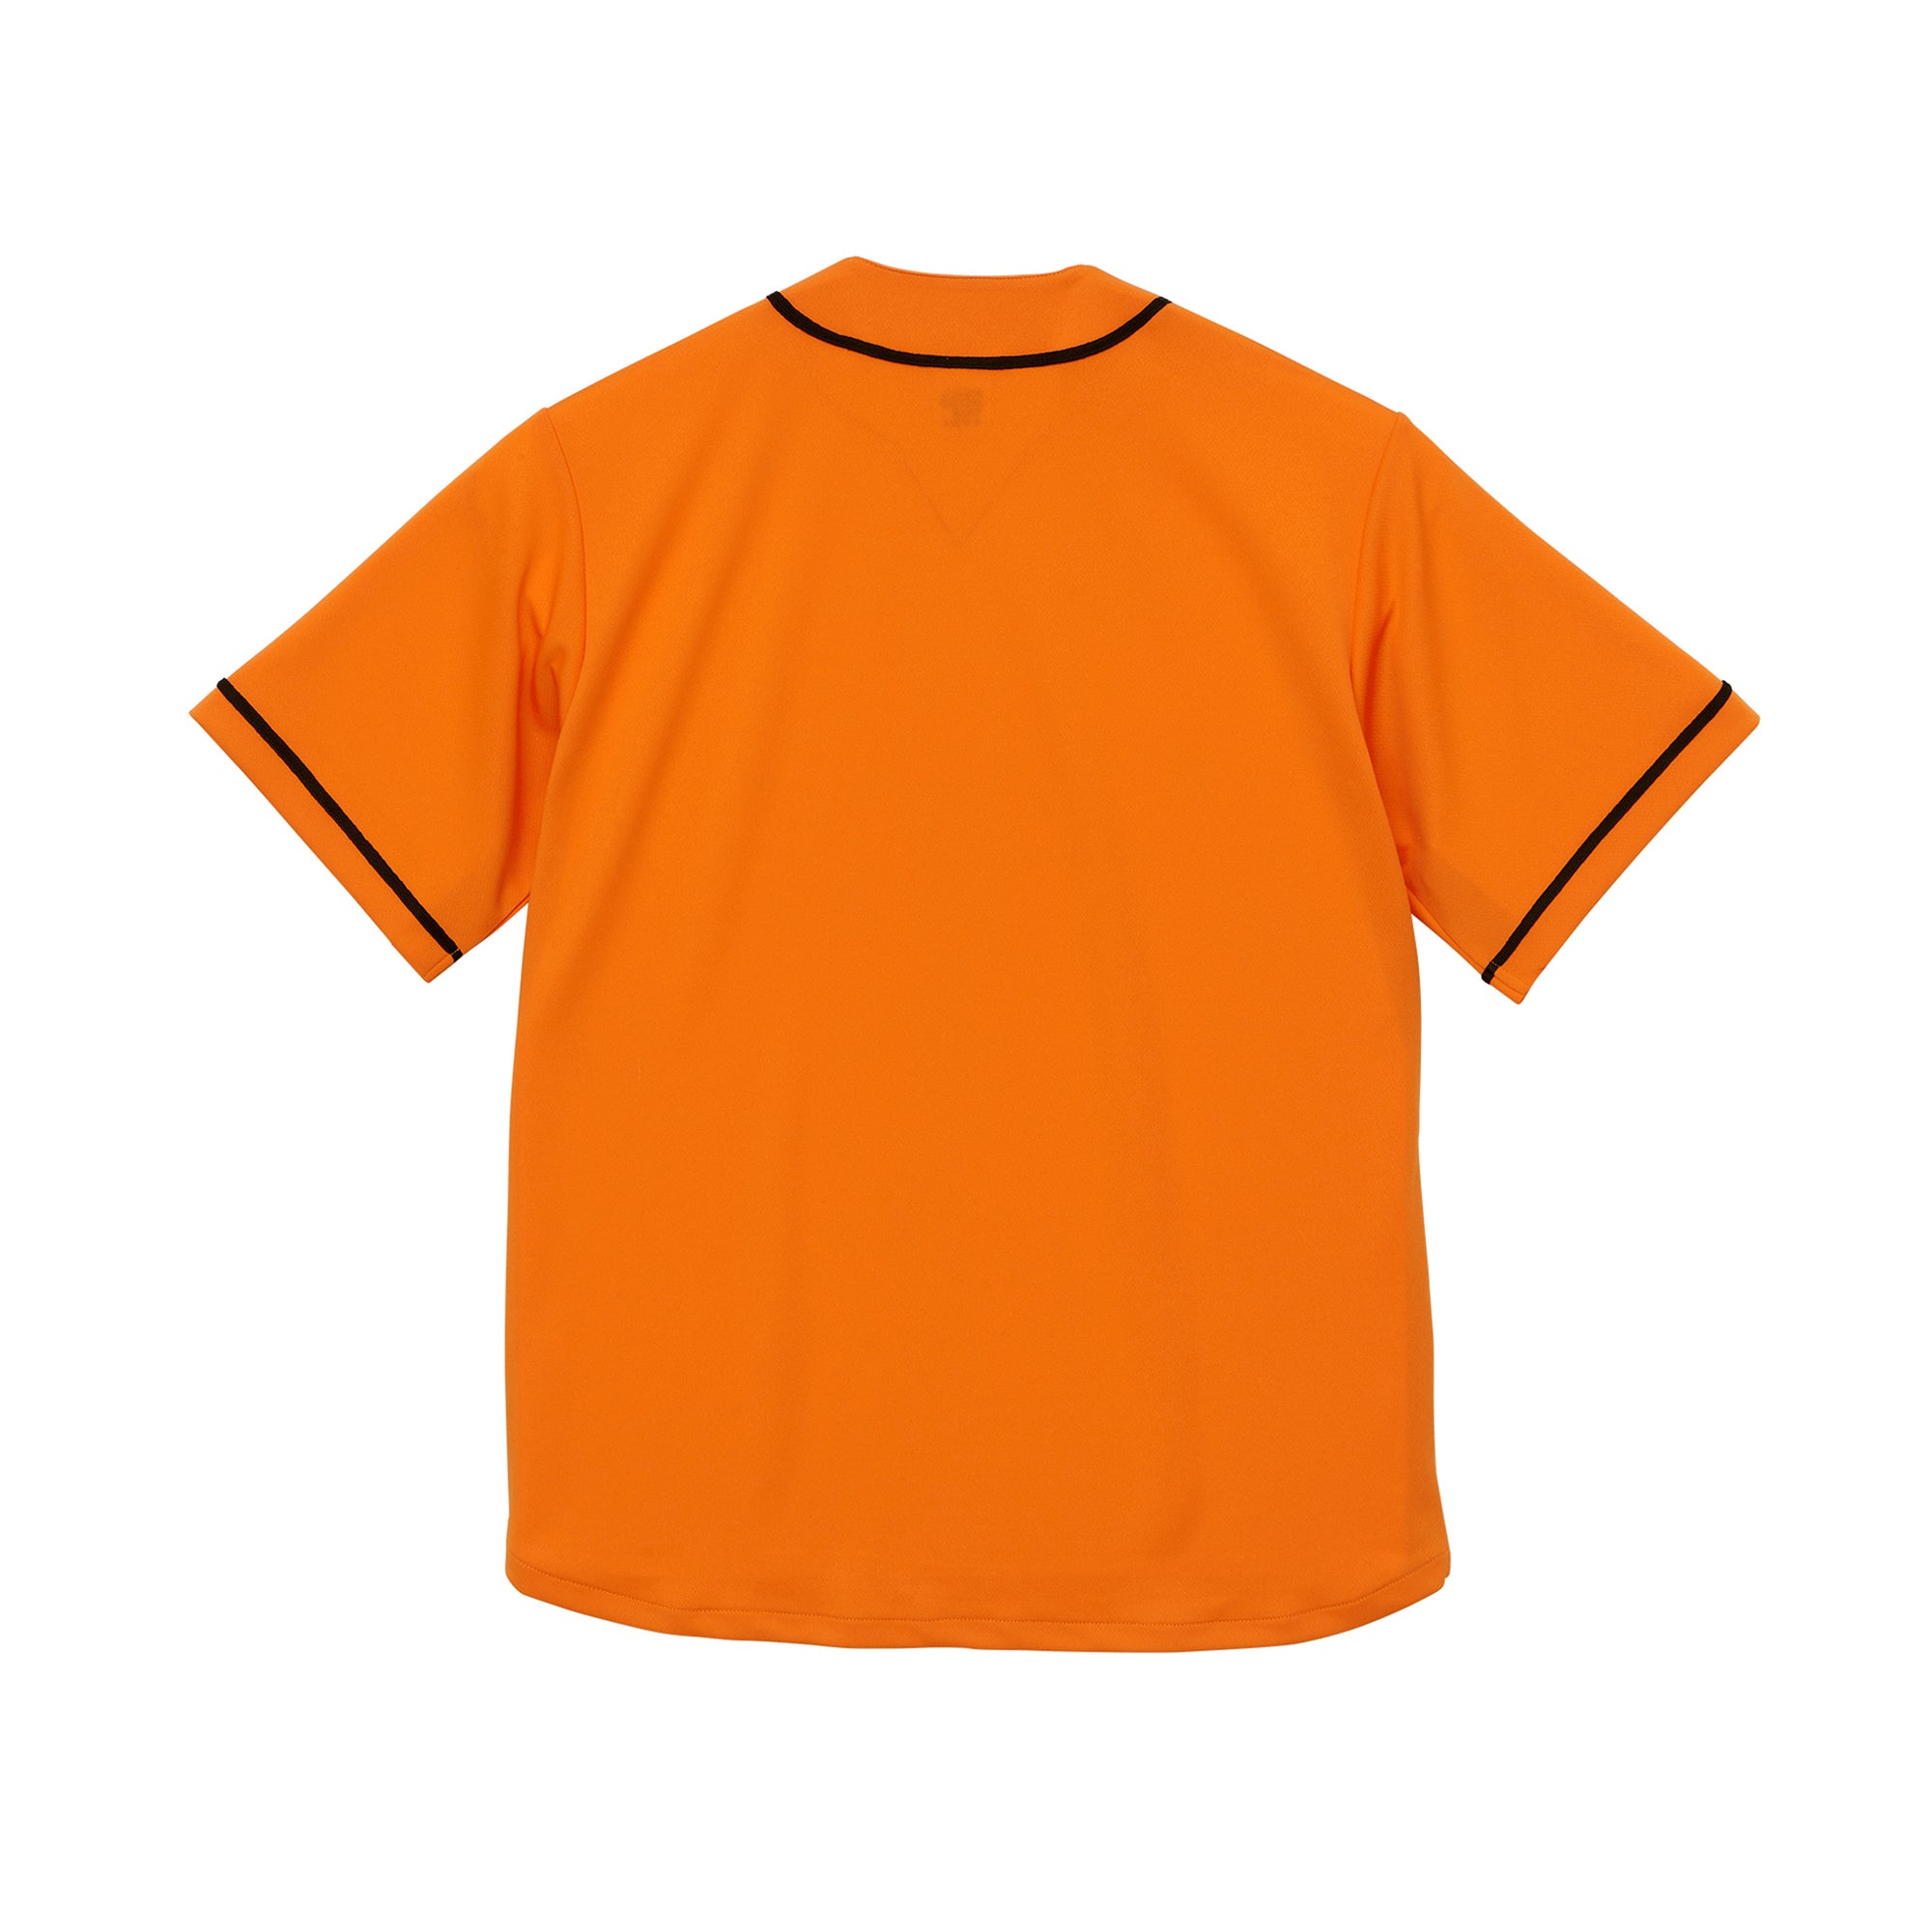 5982 - 4.1 Oz Dry Baseball Shirt - Orange/Black x 2